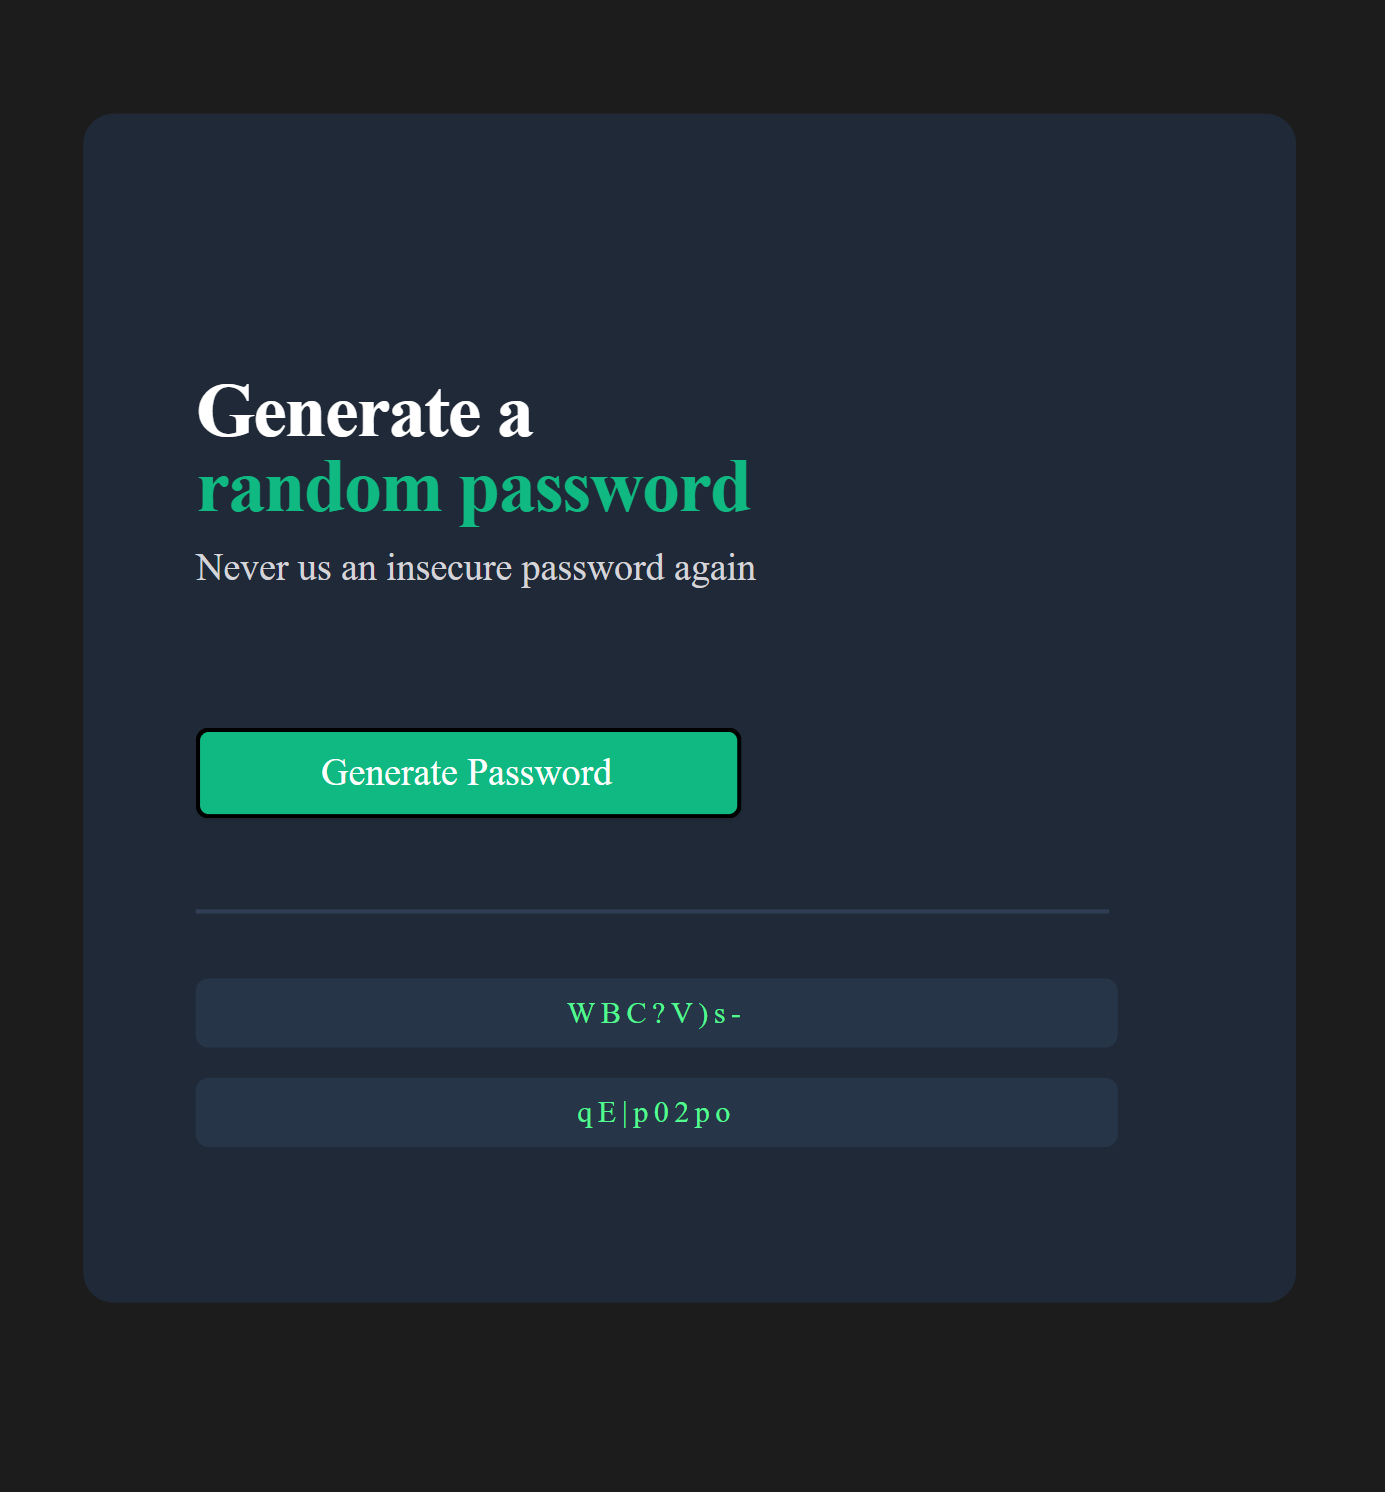 An image of a password-generator app